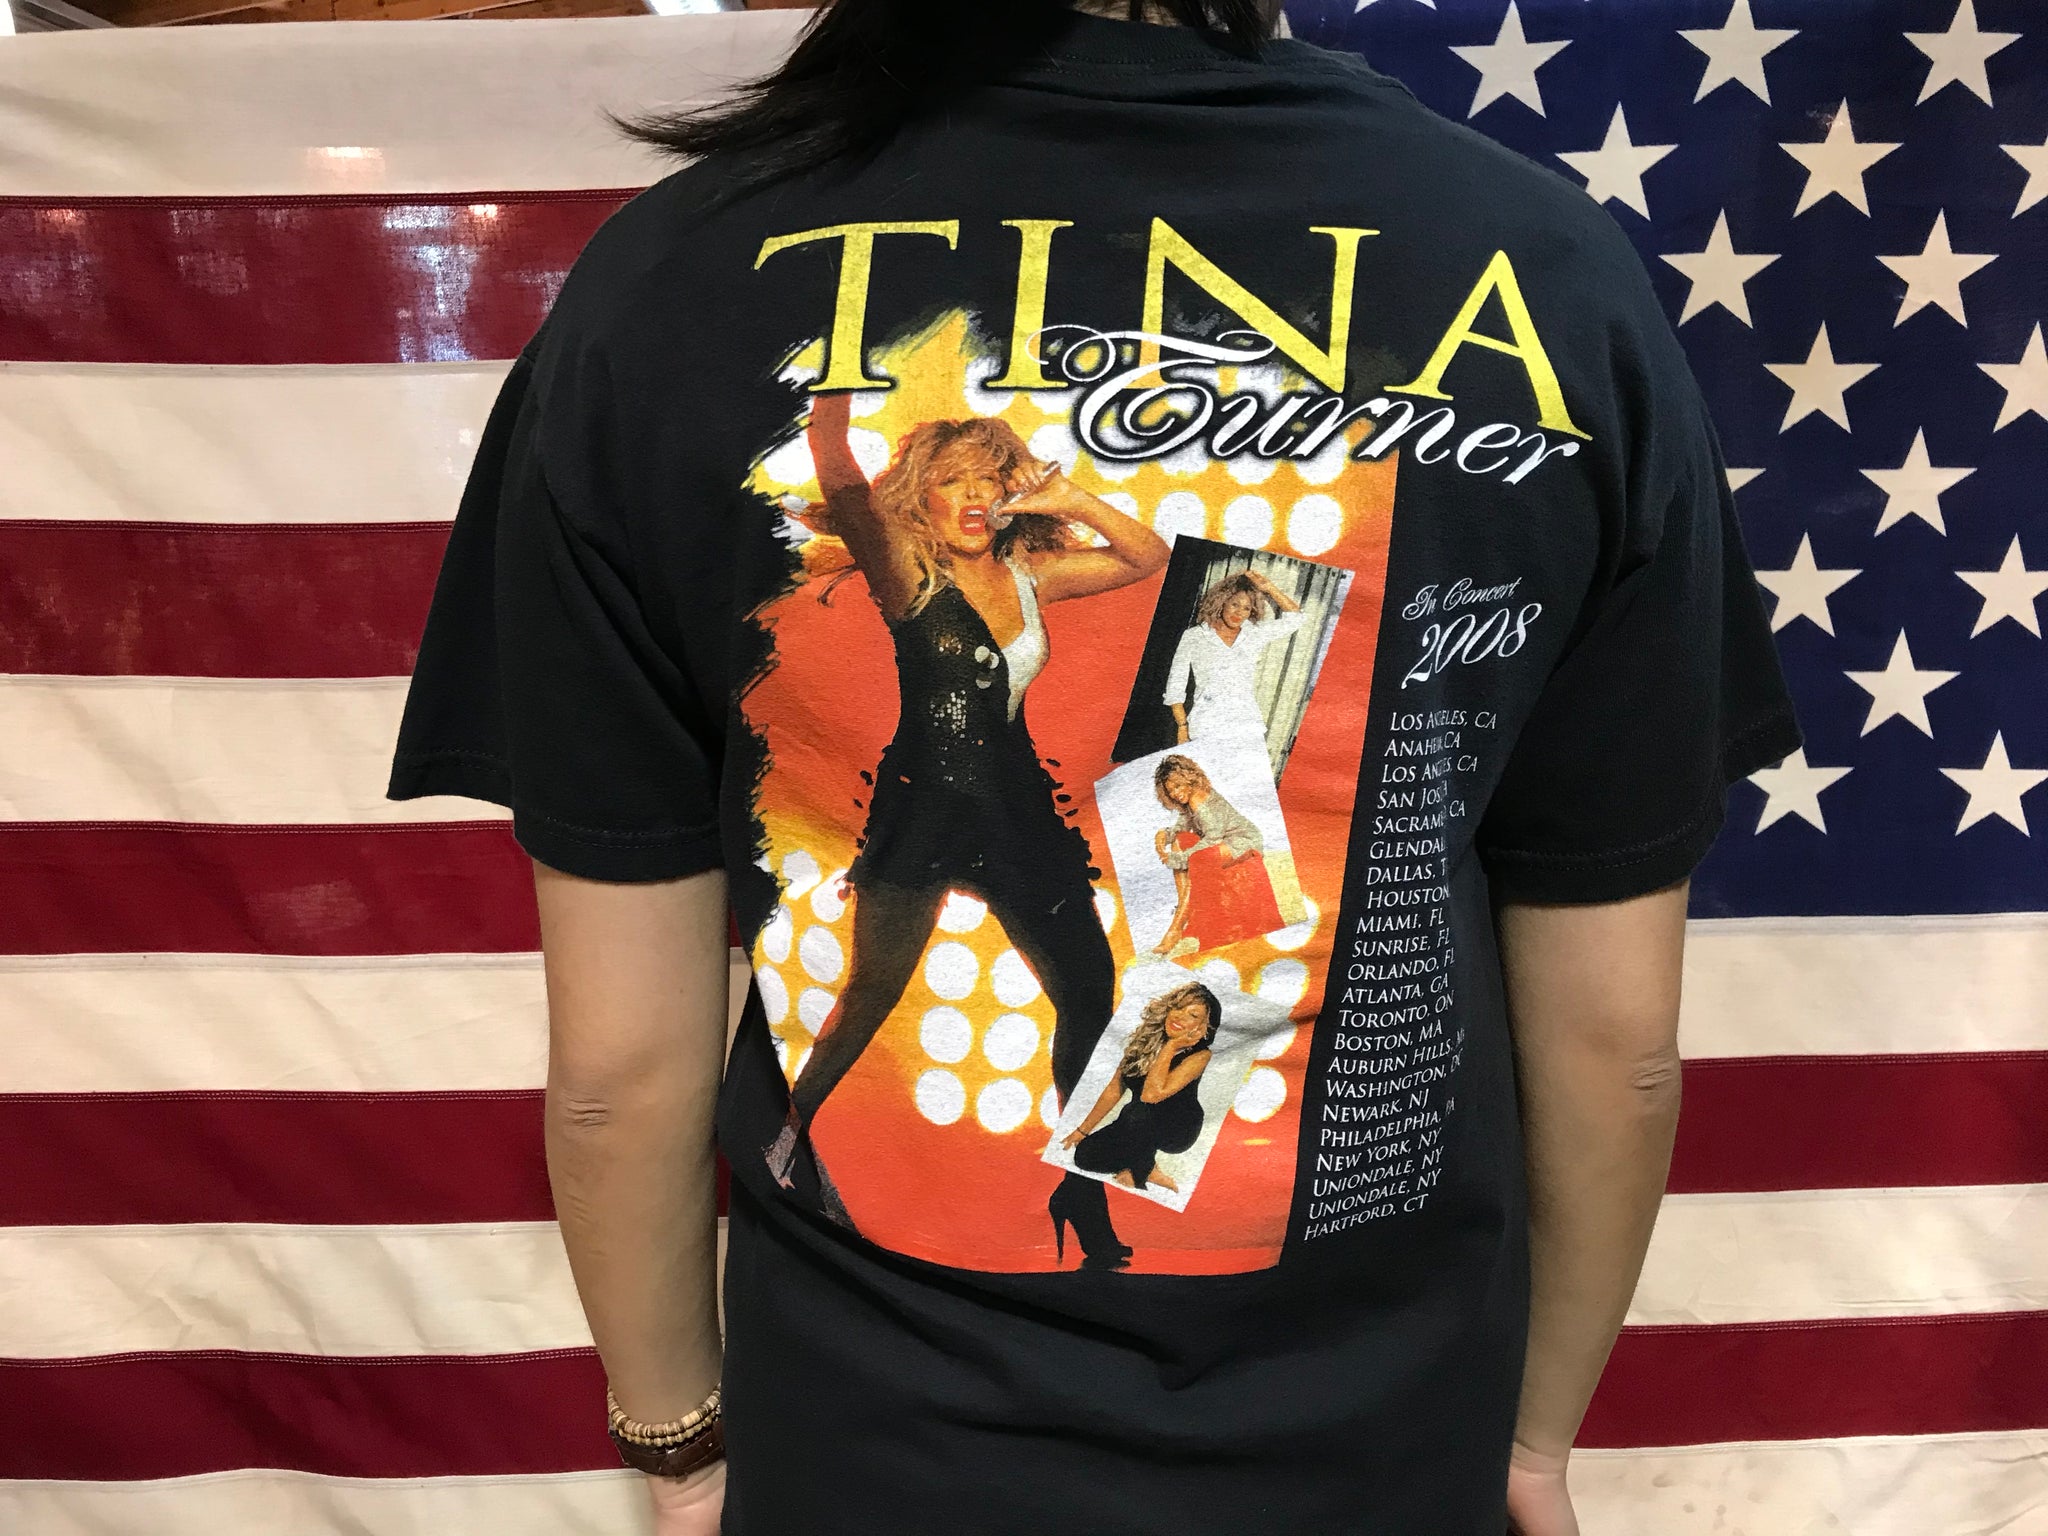 Tina Turner In Concert Tour USA 2008 Original Vintage Rock T-Shirt by Delta